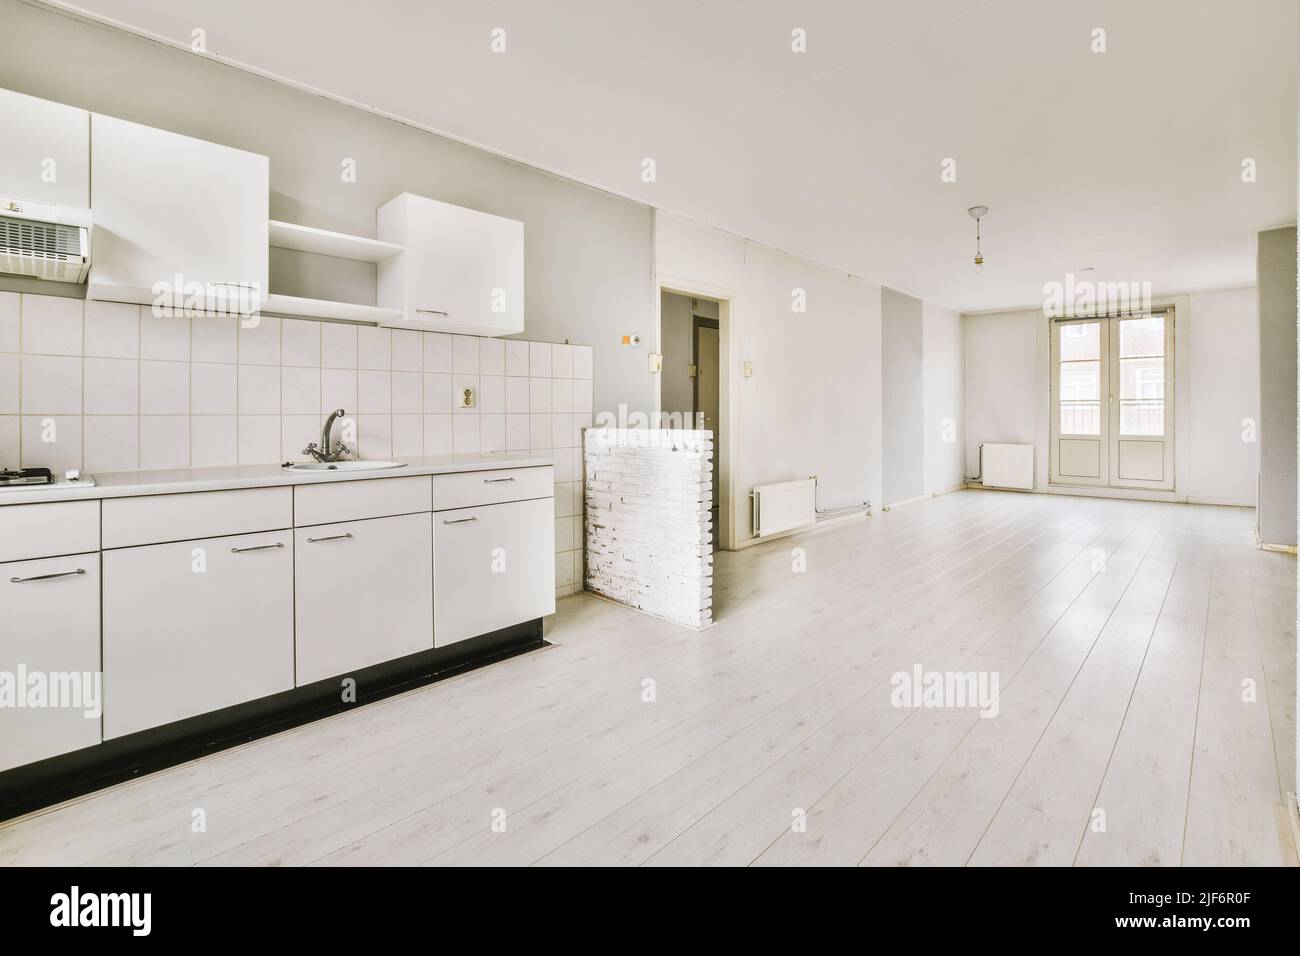 Interior of empty open plan white kitchen with windows and wooden parquet floor Stock Photo